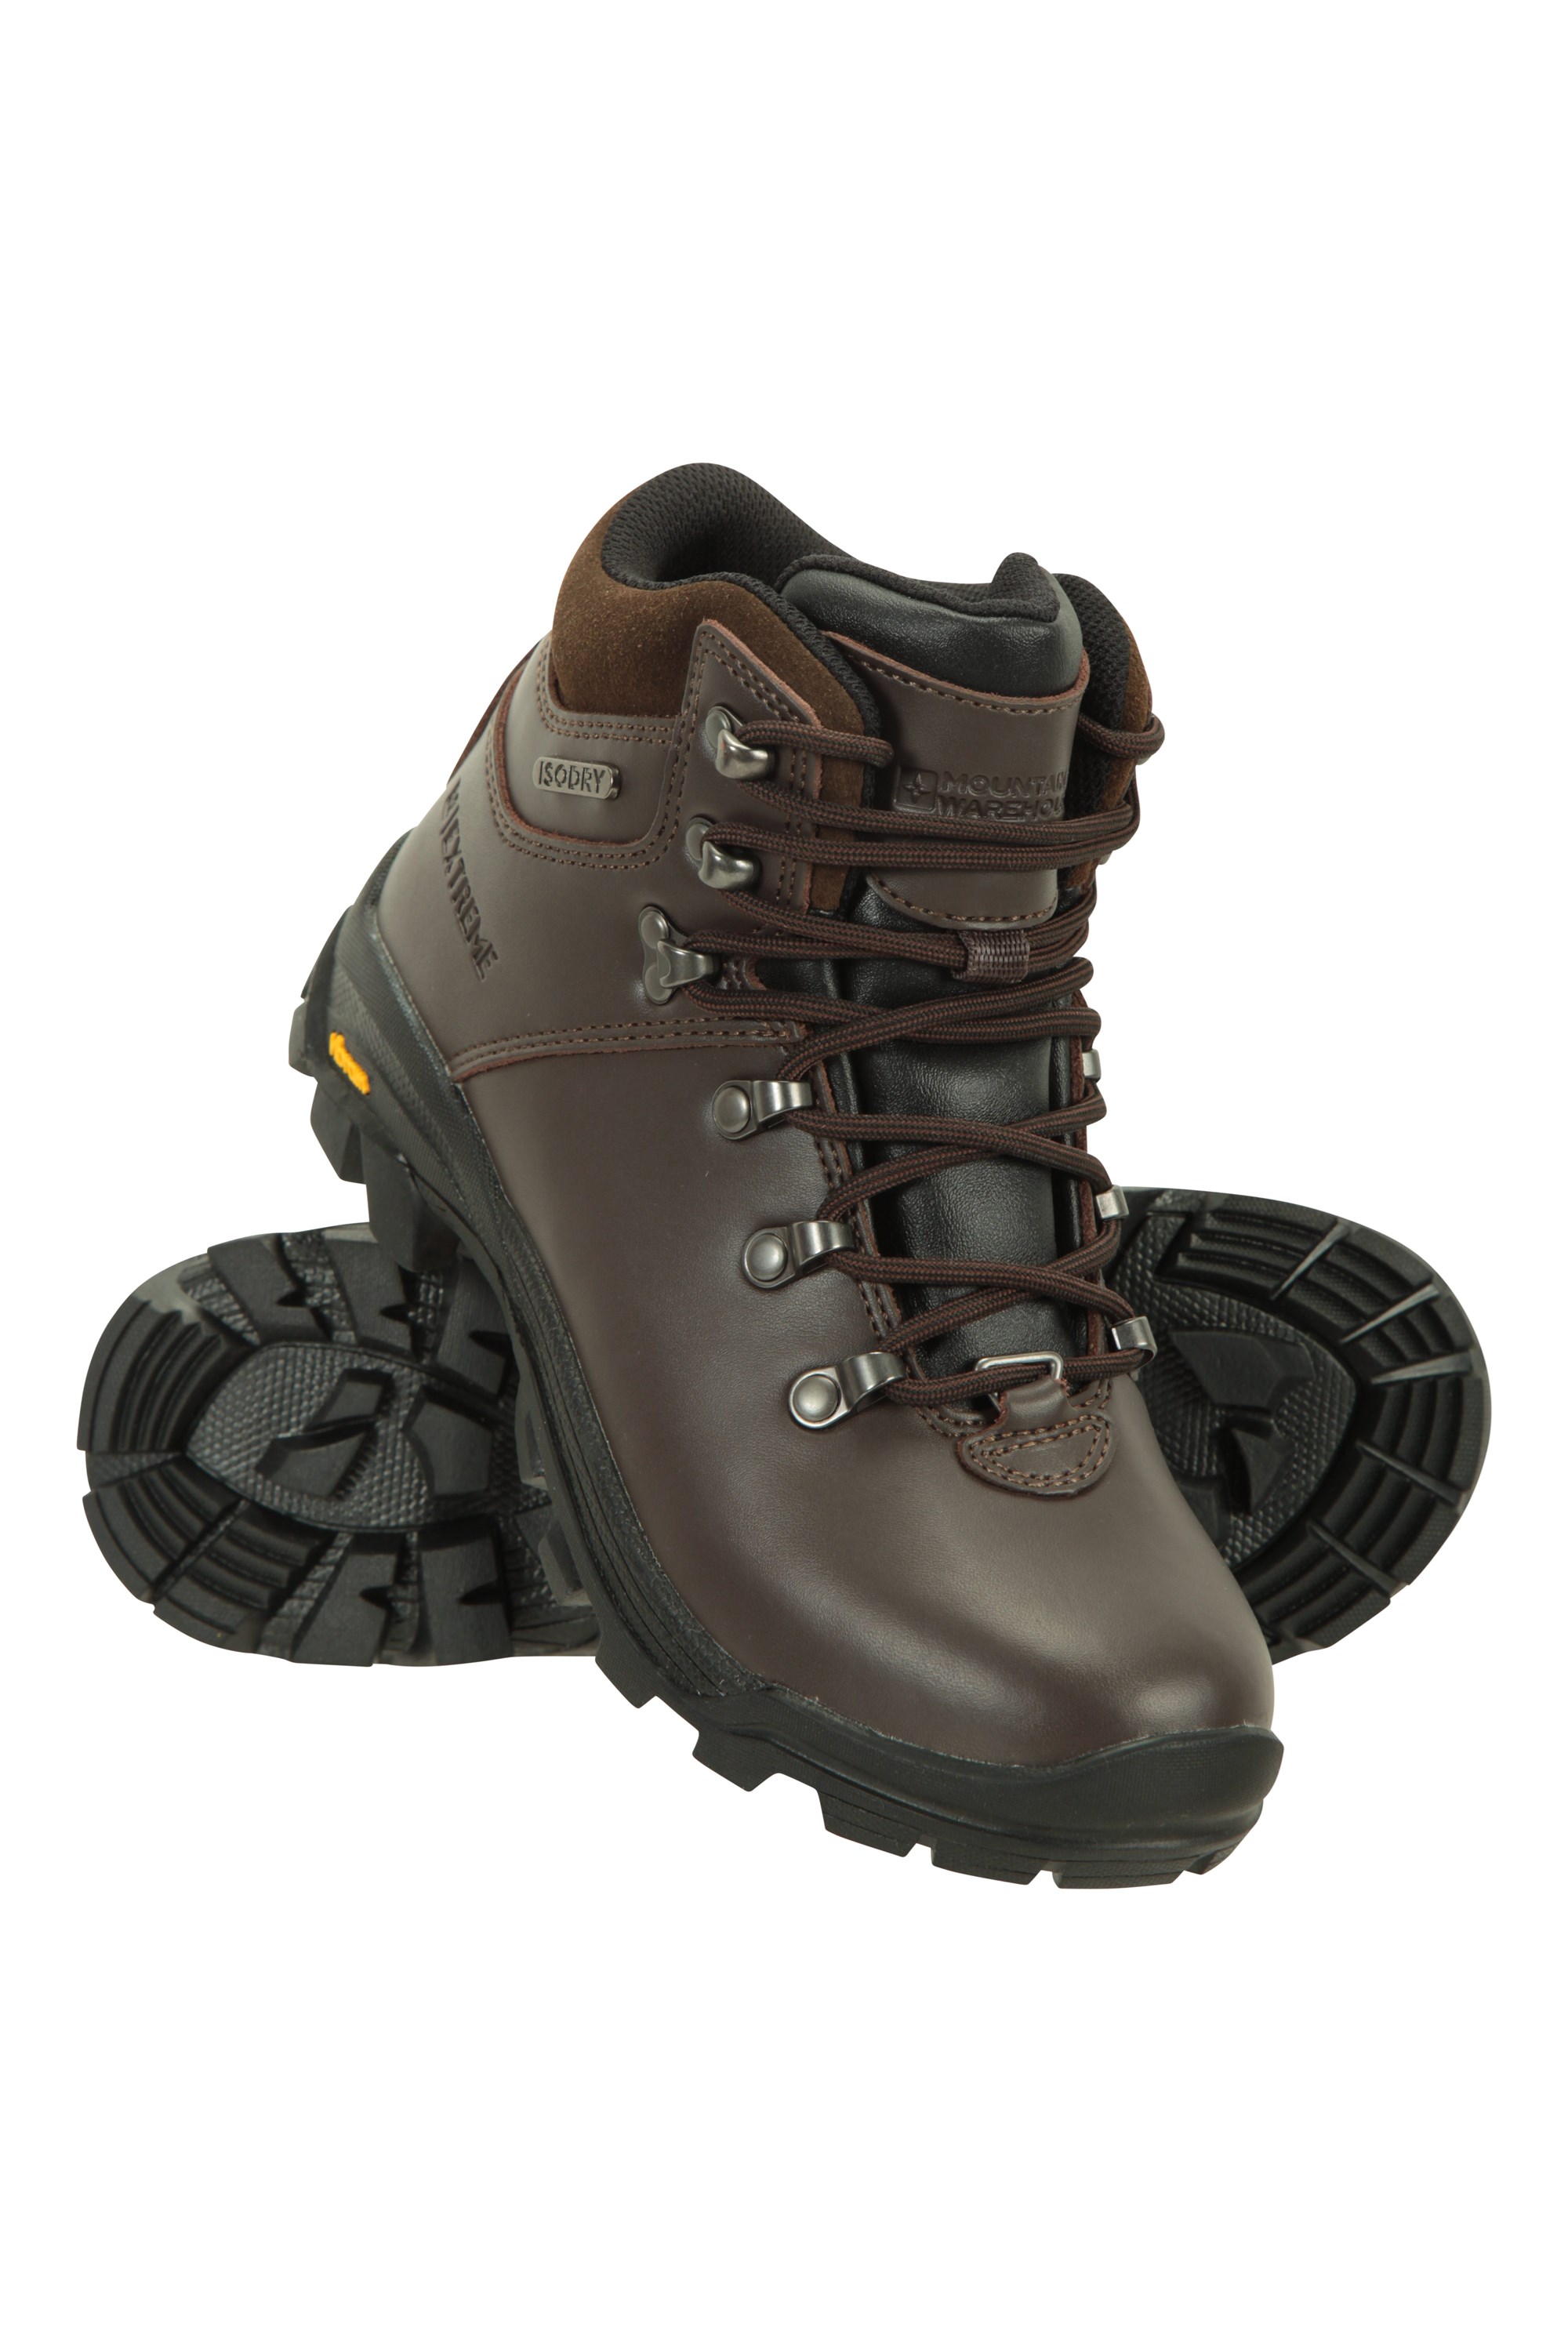 Mountain Warehouse Vibram Womens Waterproof Boots Hiking Shoes 